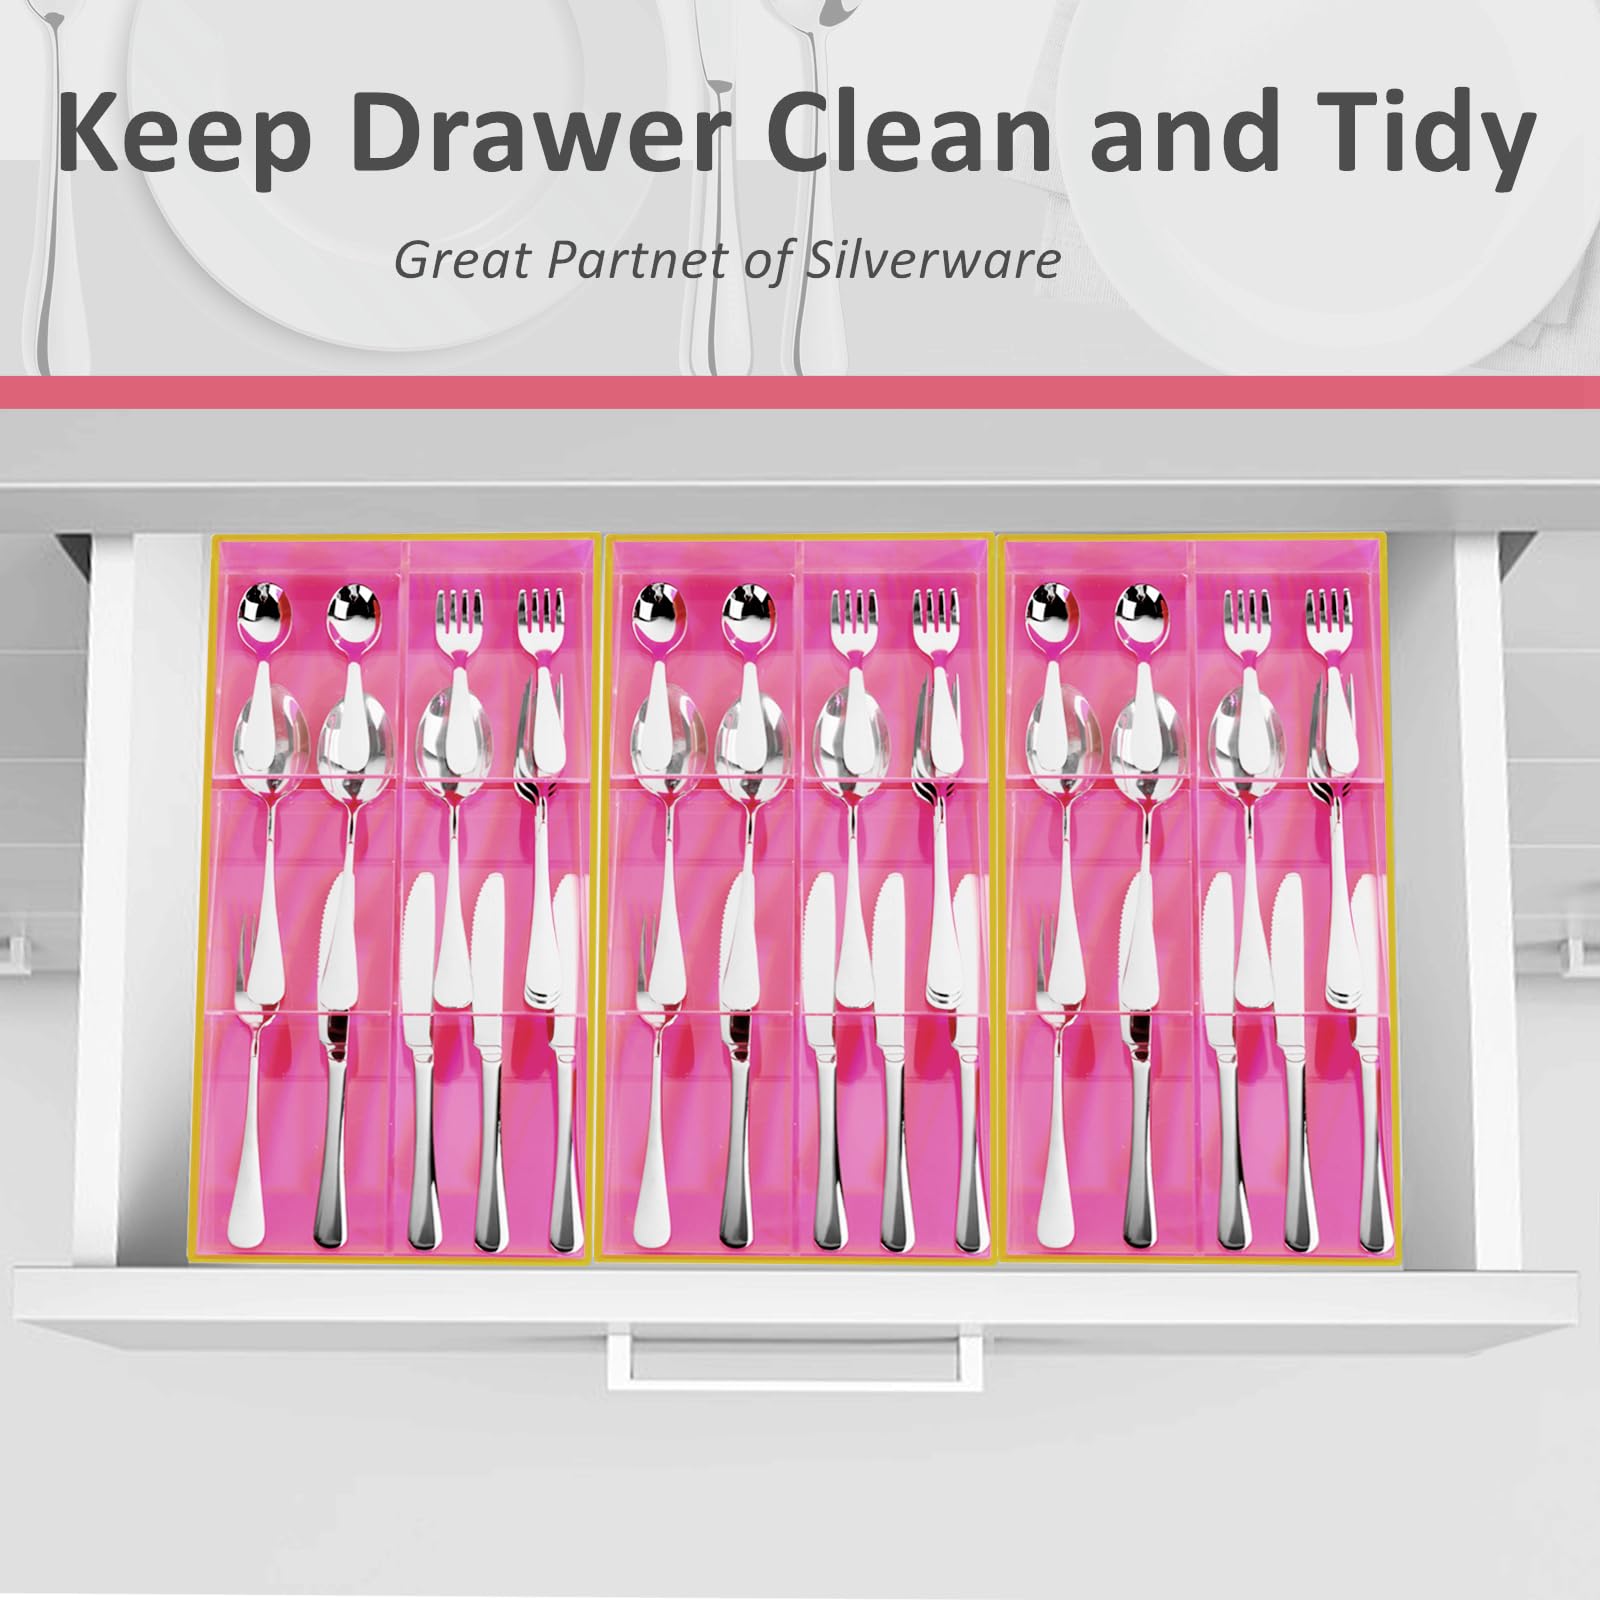 Gelite Acrylic Silverware Drawer Organizer Kitchen Cutlery Tray Caddy Flatware Organizer for Drawer, Easy Dismount and Wash, Neon Pink